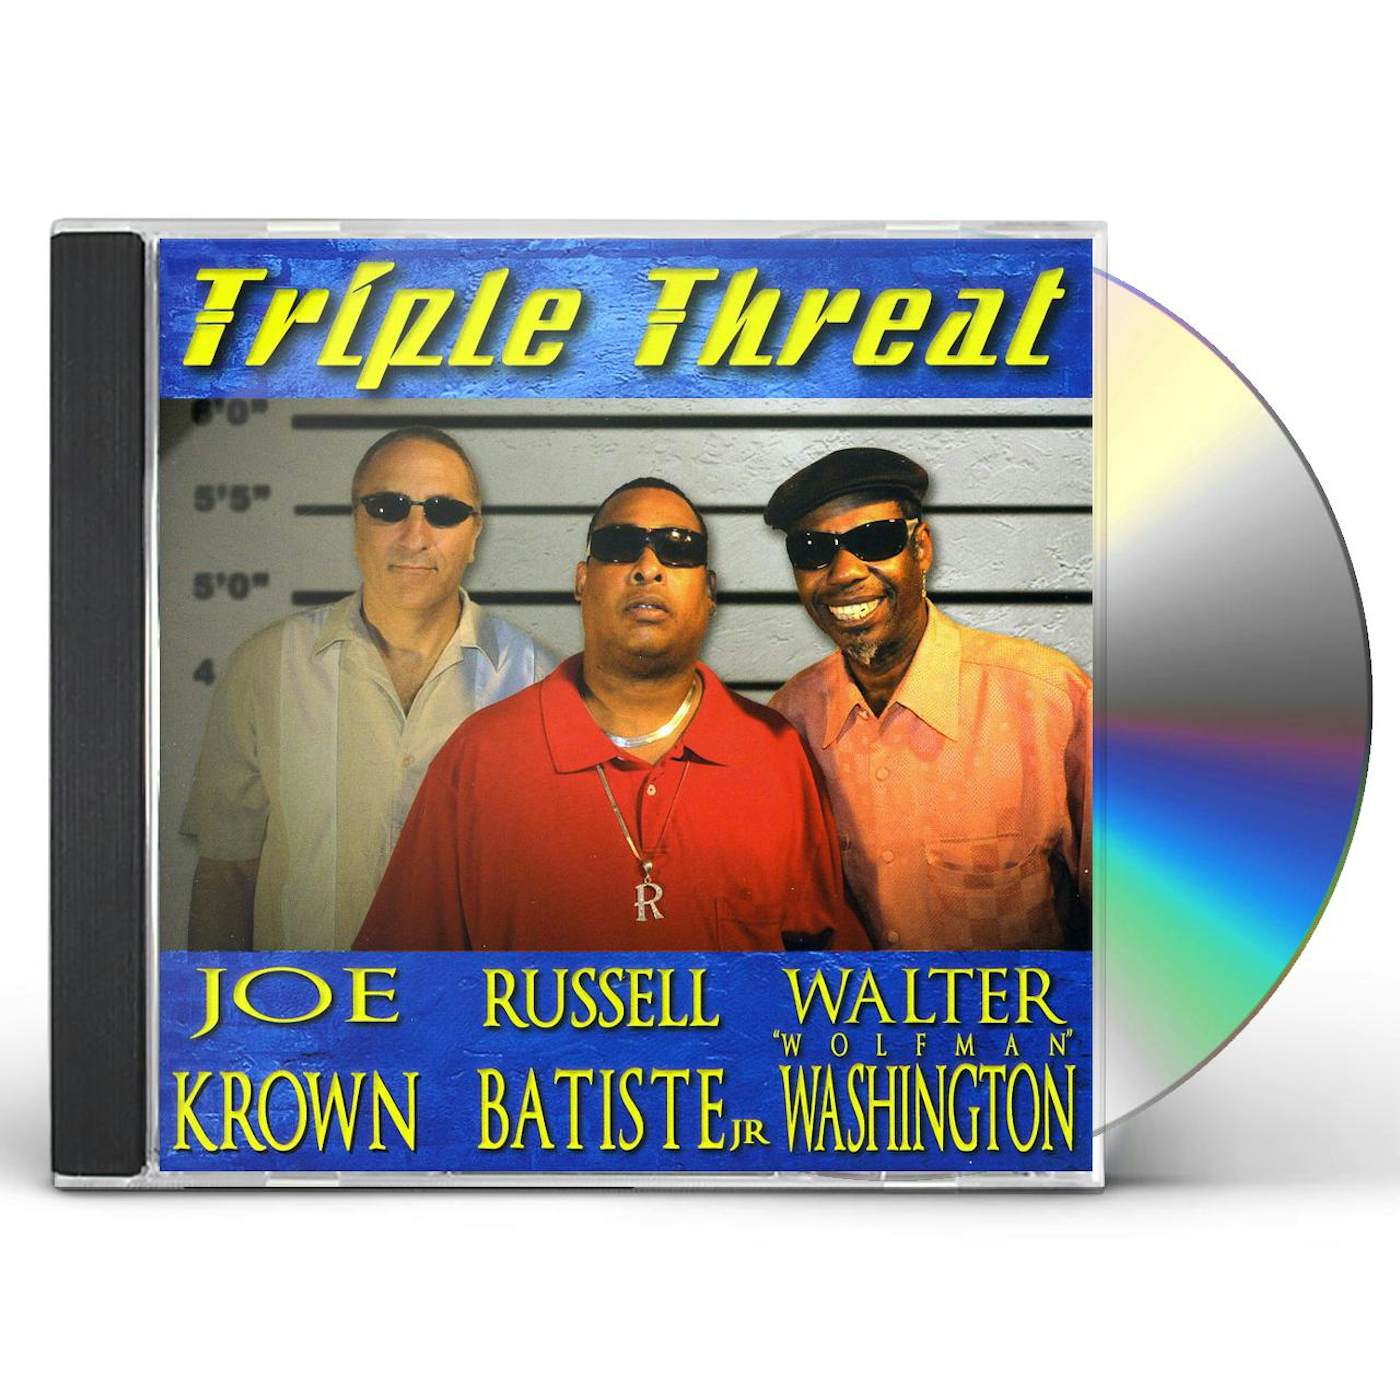 Joe Krown TRIPLE THREAT CD